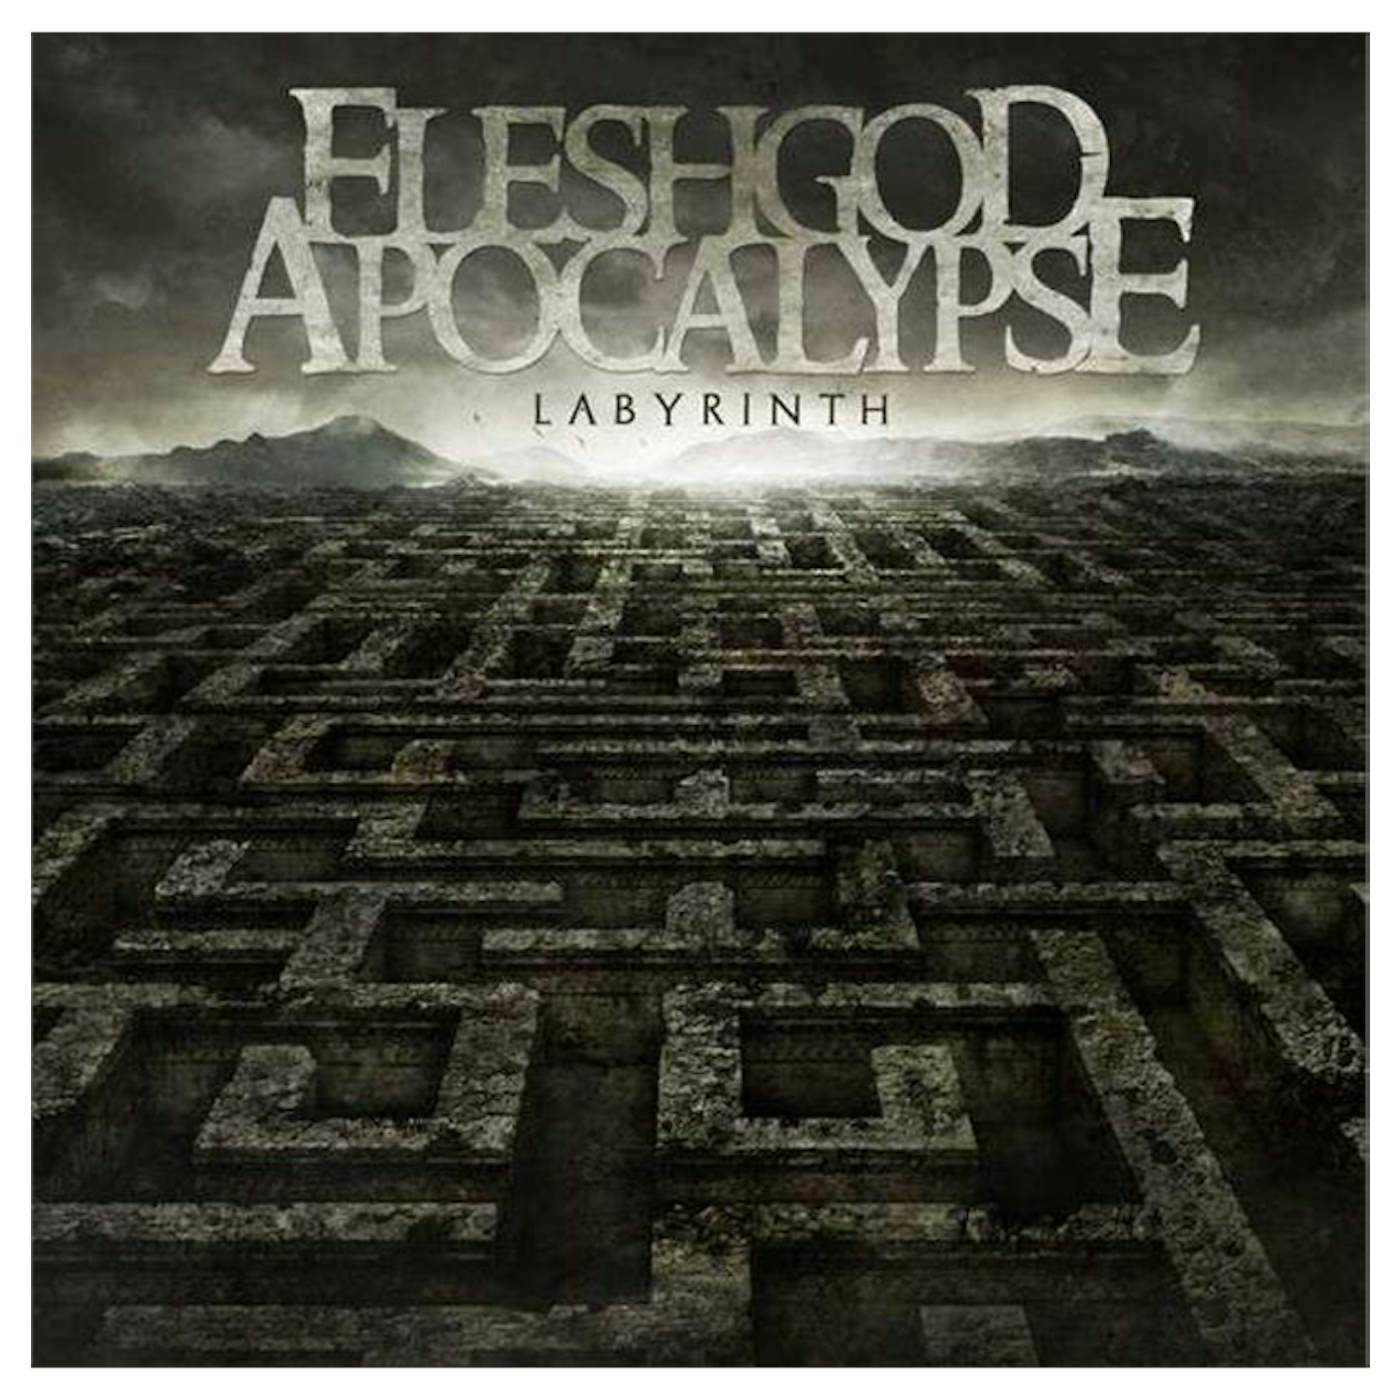 FLESHGOD APOCALYPSE - 'Labyrinth' CD